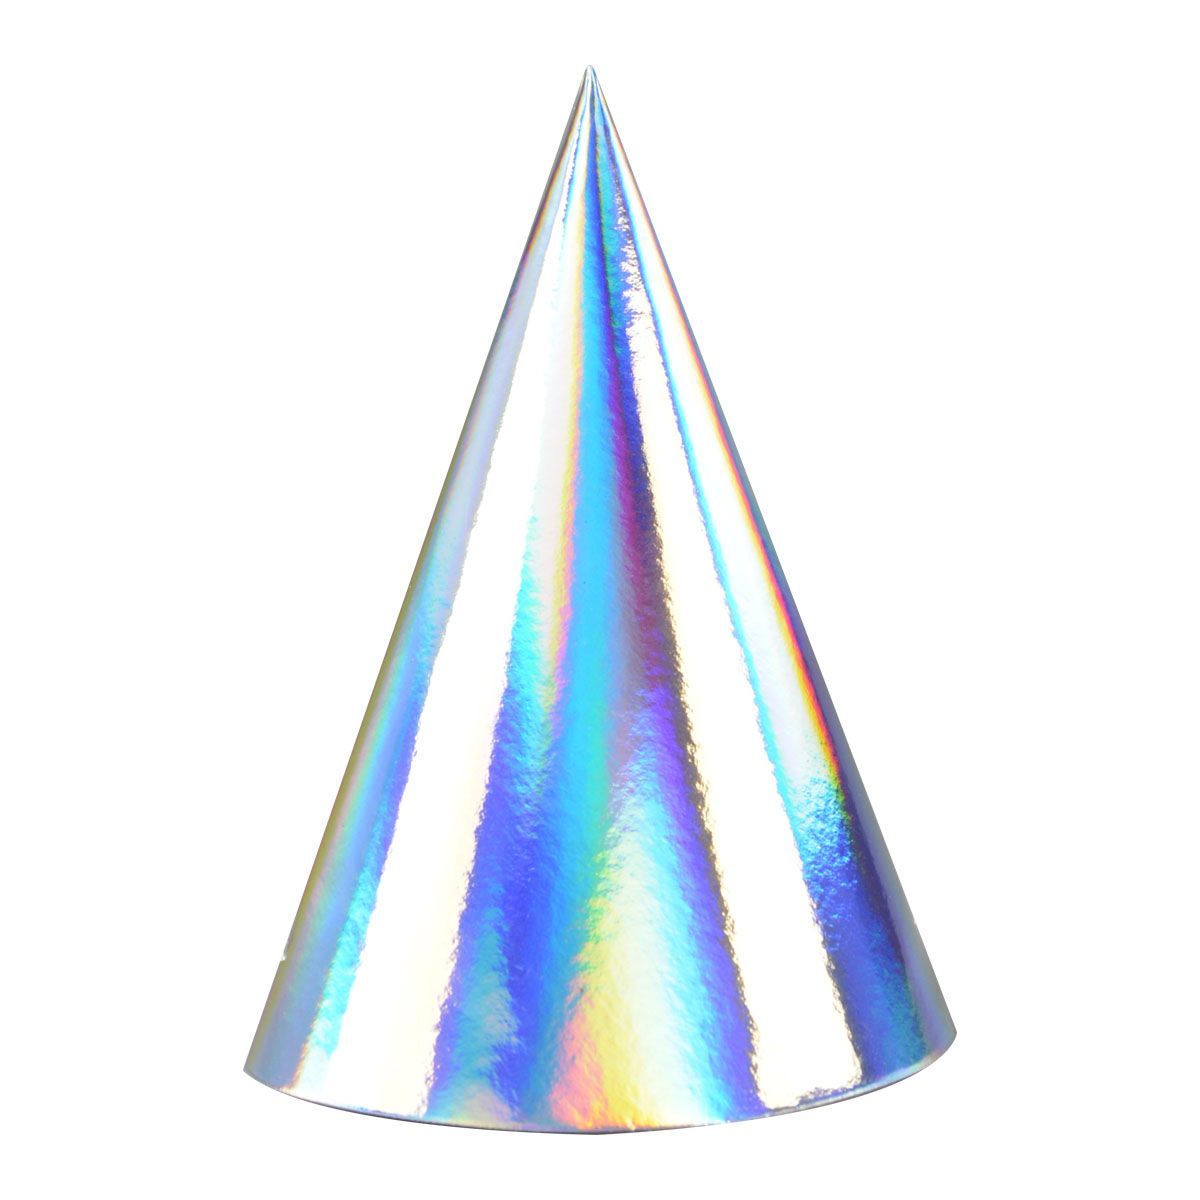 Czapka party holograficzna 3szt. mix papier Arpex (KP6265)